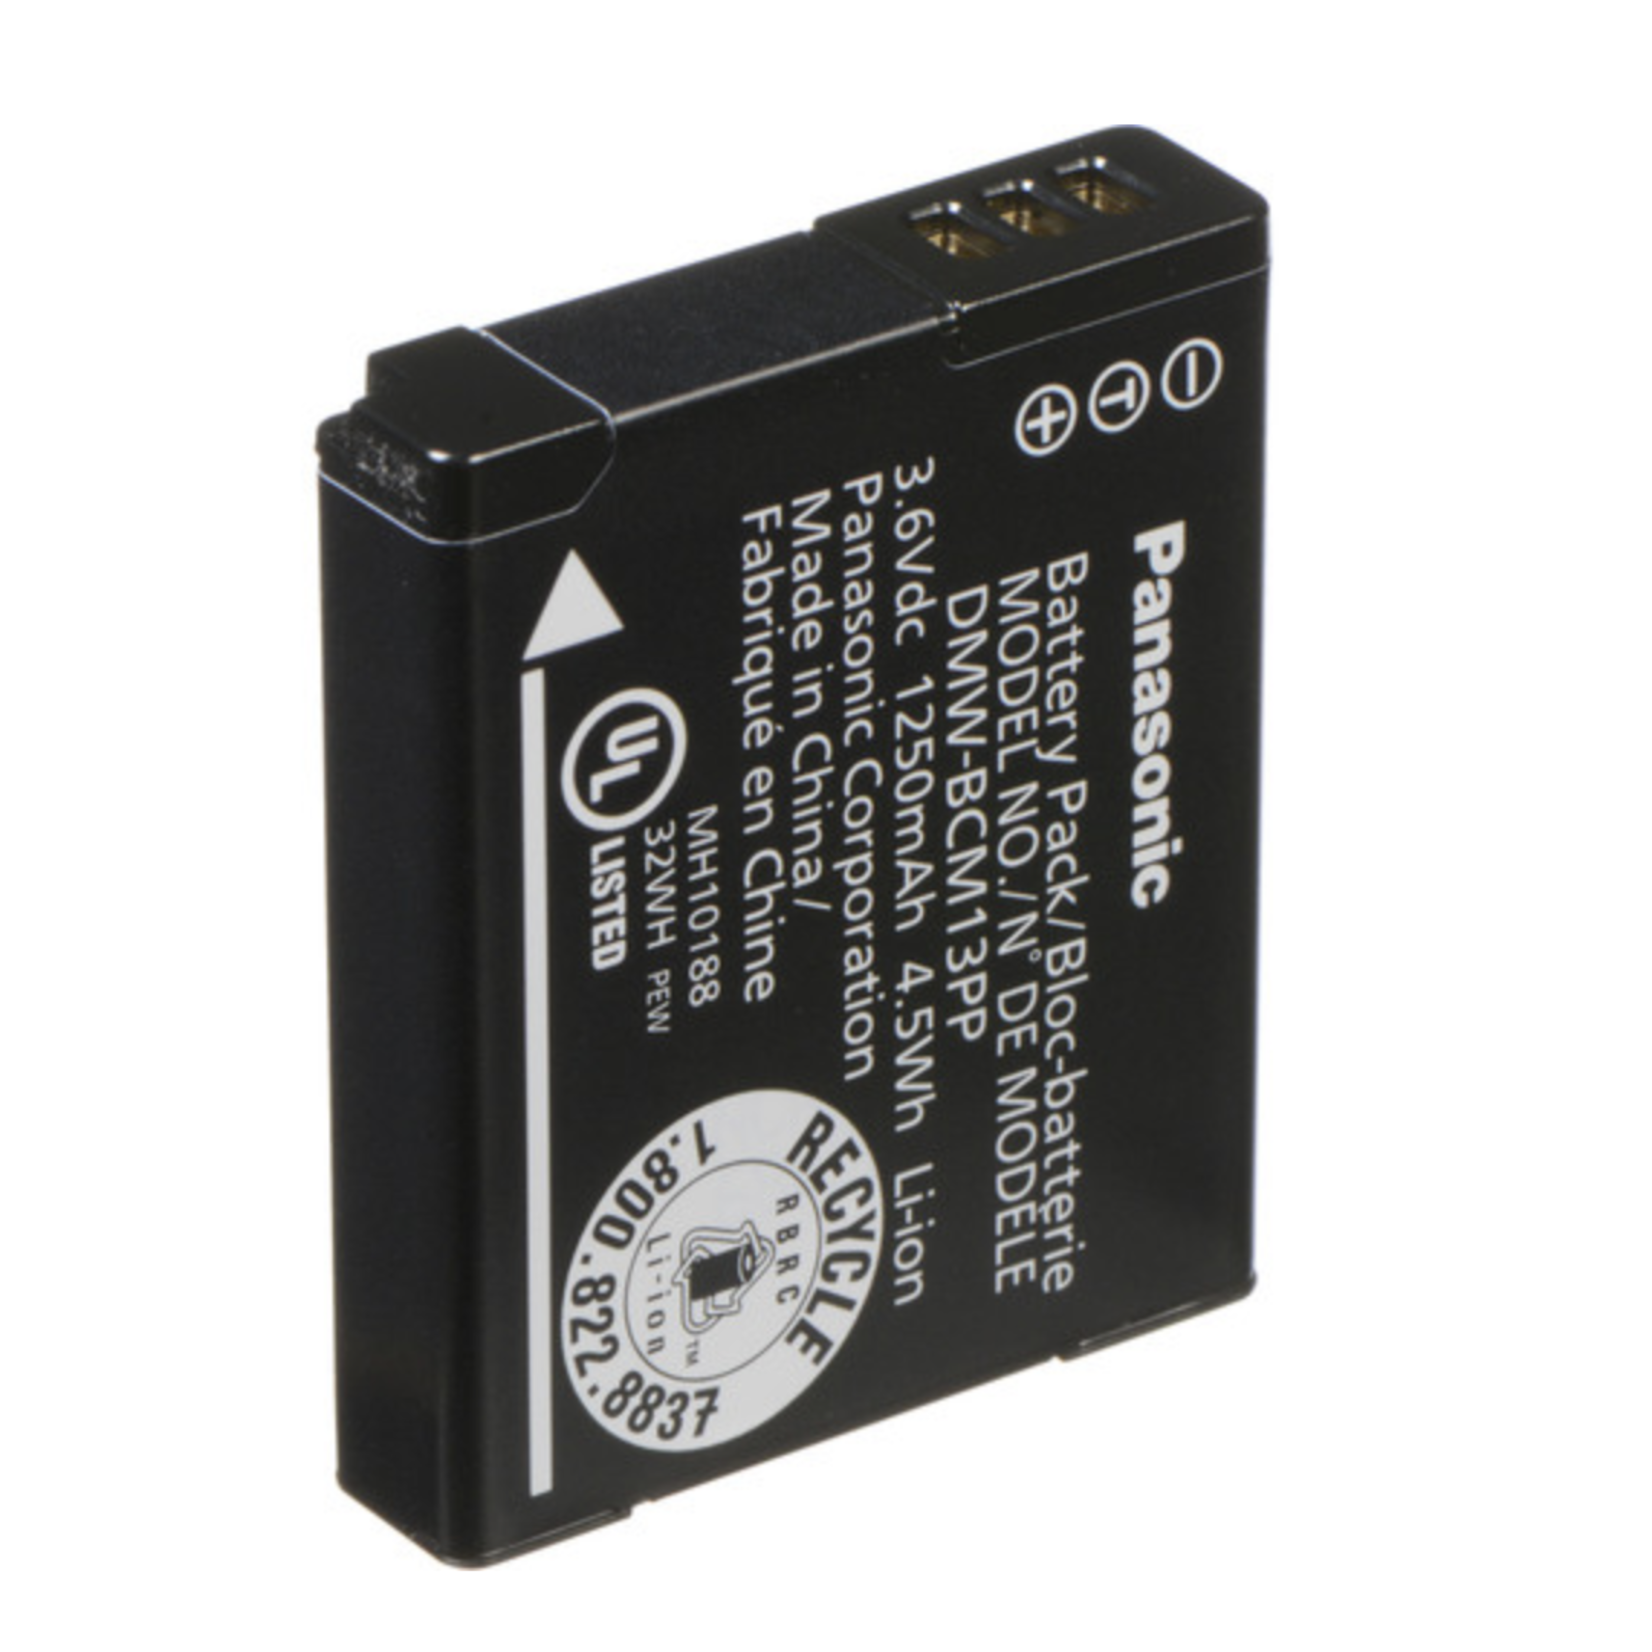 Panasonic Panasonic DMW-BCM13 Lithium-Ion Battery Pack (3.6V, 1250mAh)